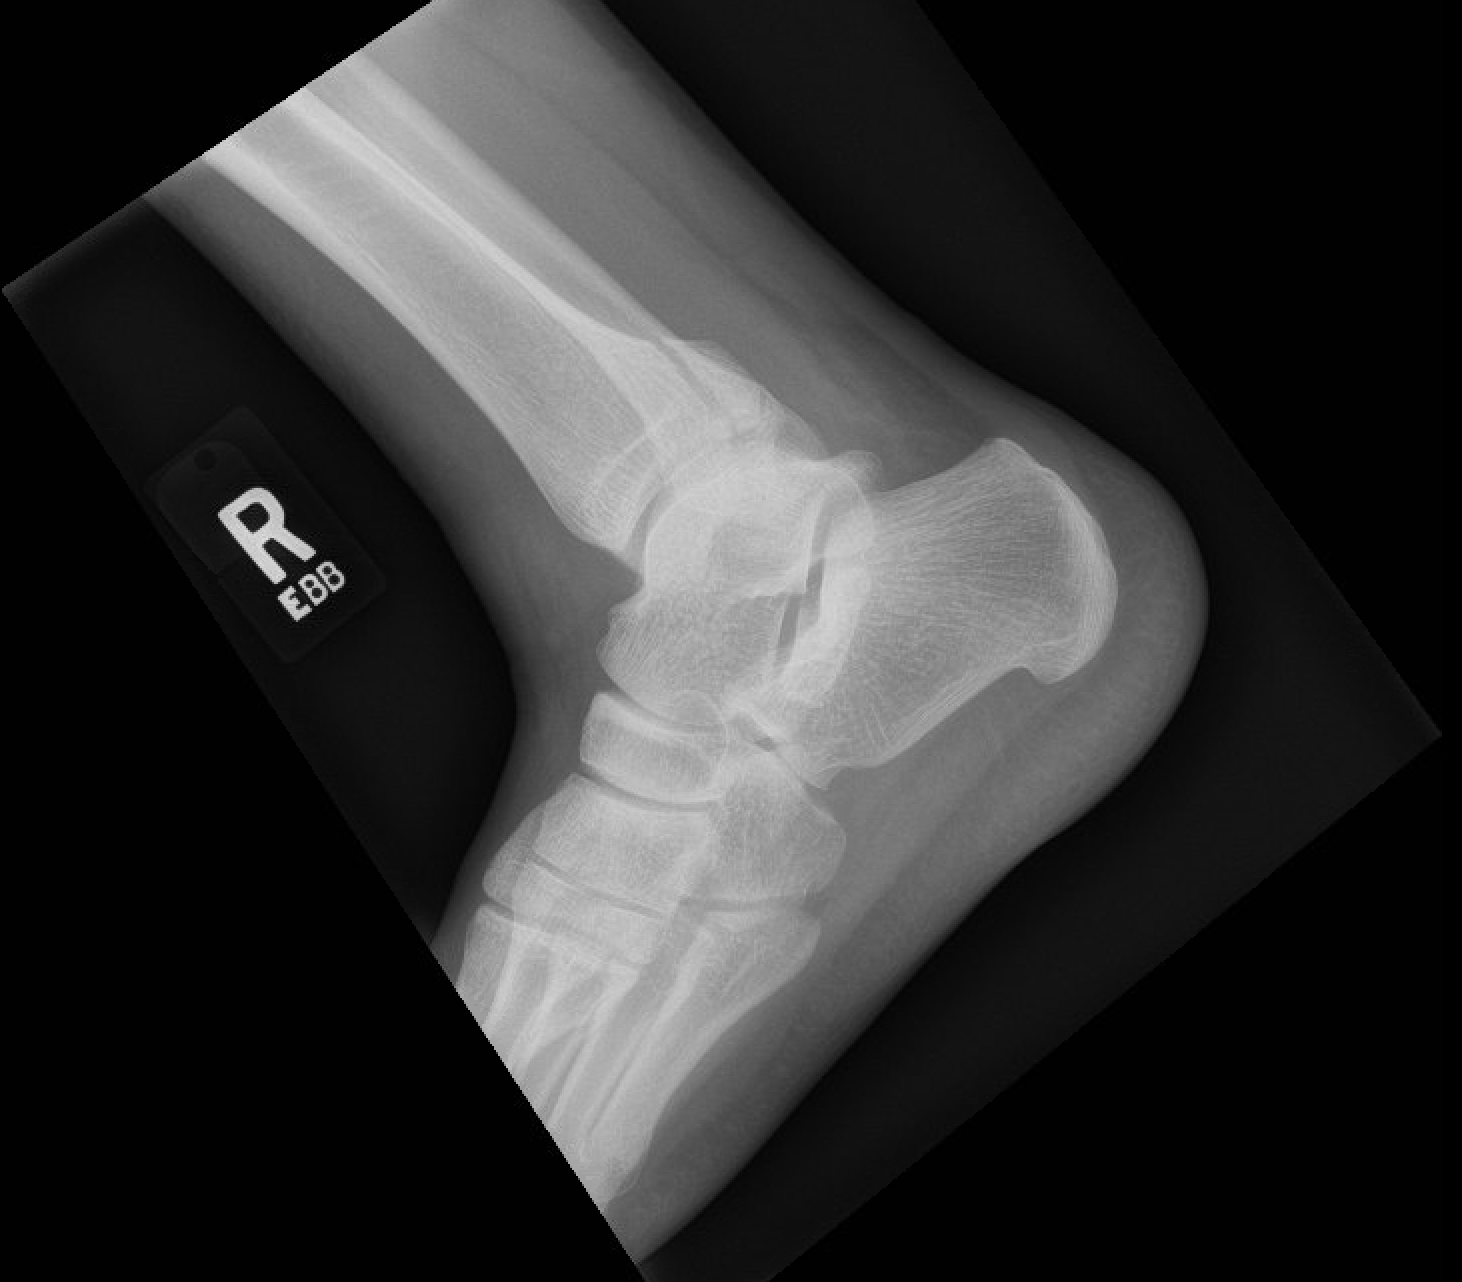 posterior malleolar fracture